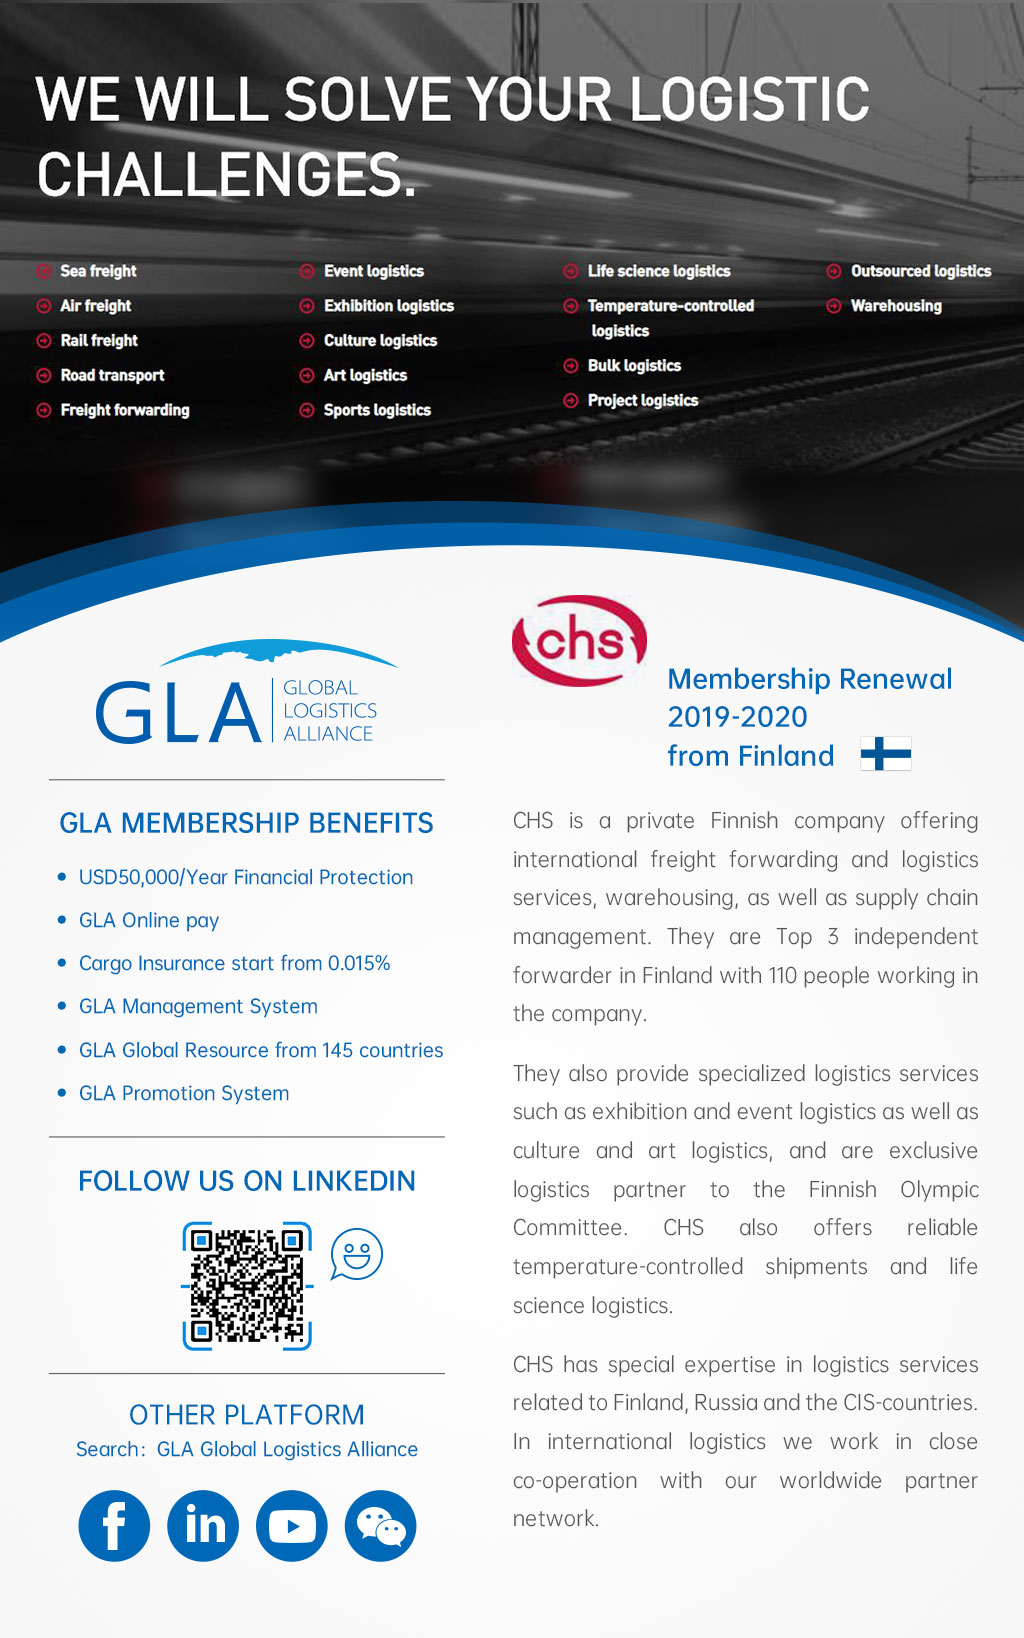 GLA Membership Renewal — CHS Air & Sea Oy from Finland